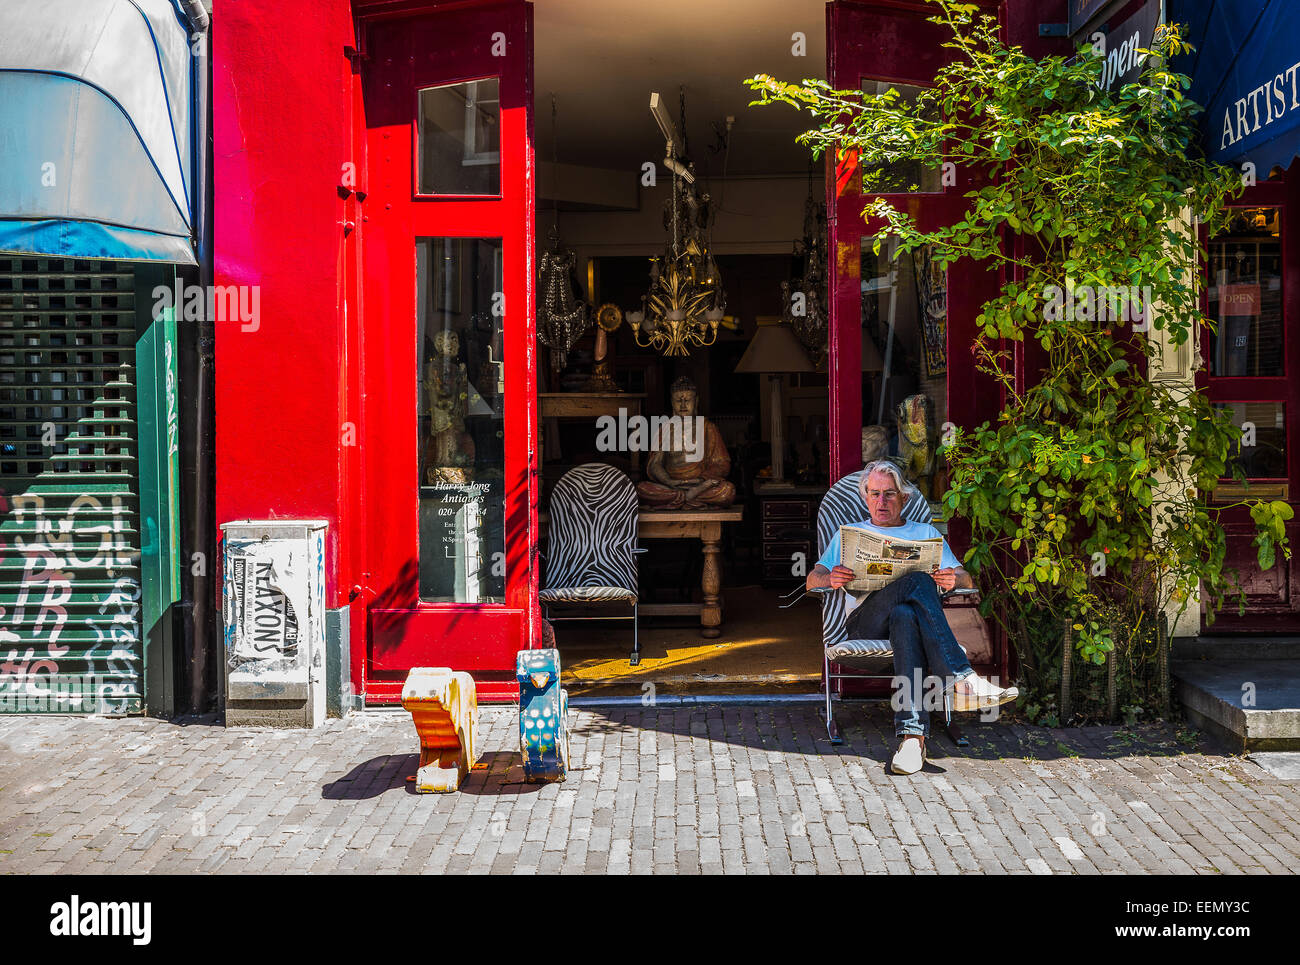 Amsterdam, people and art shops in Spiegelkwartier Stock Photo